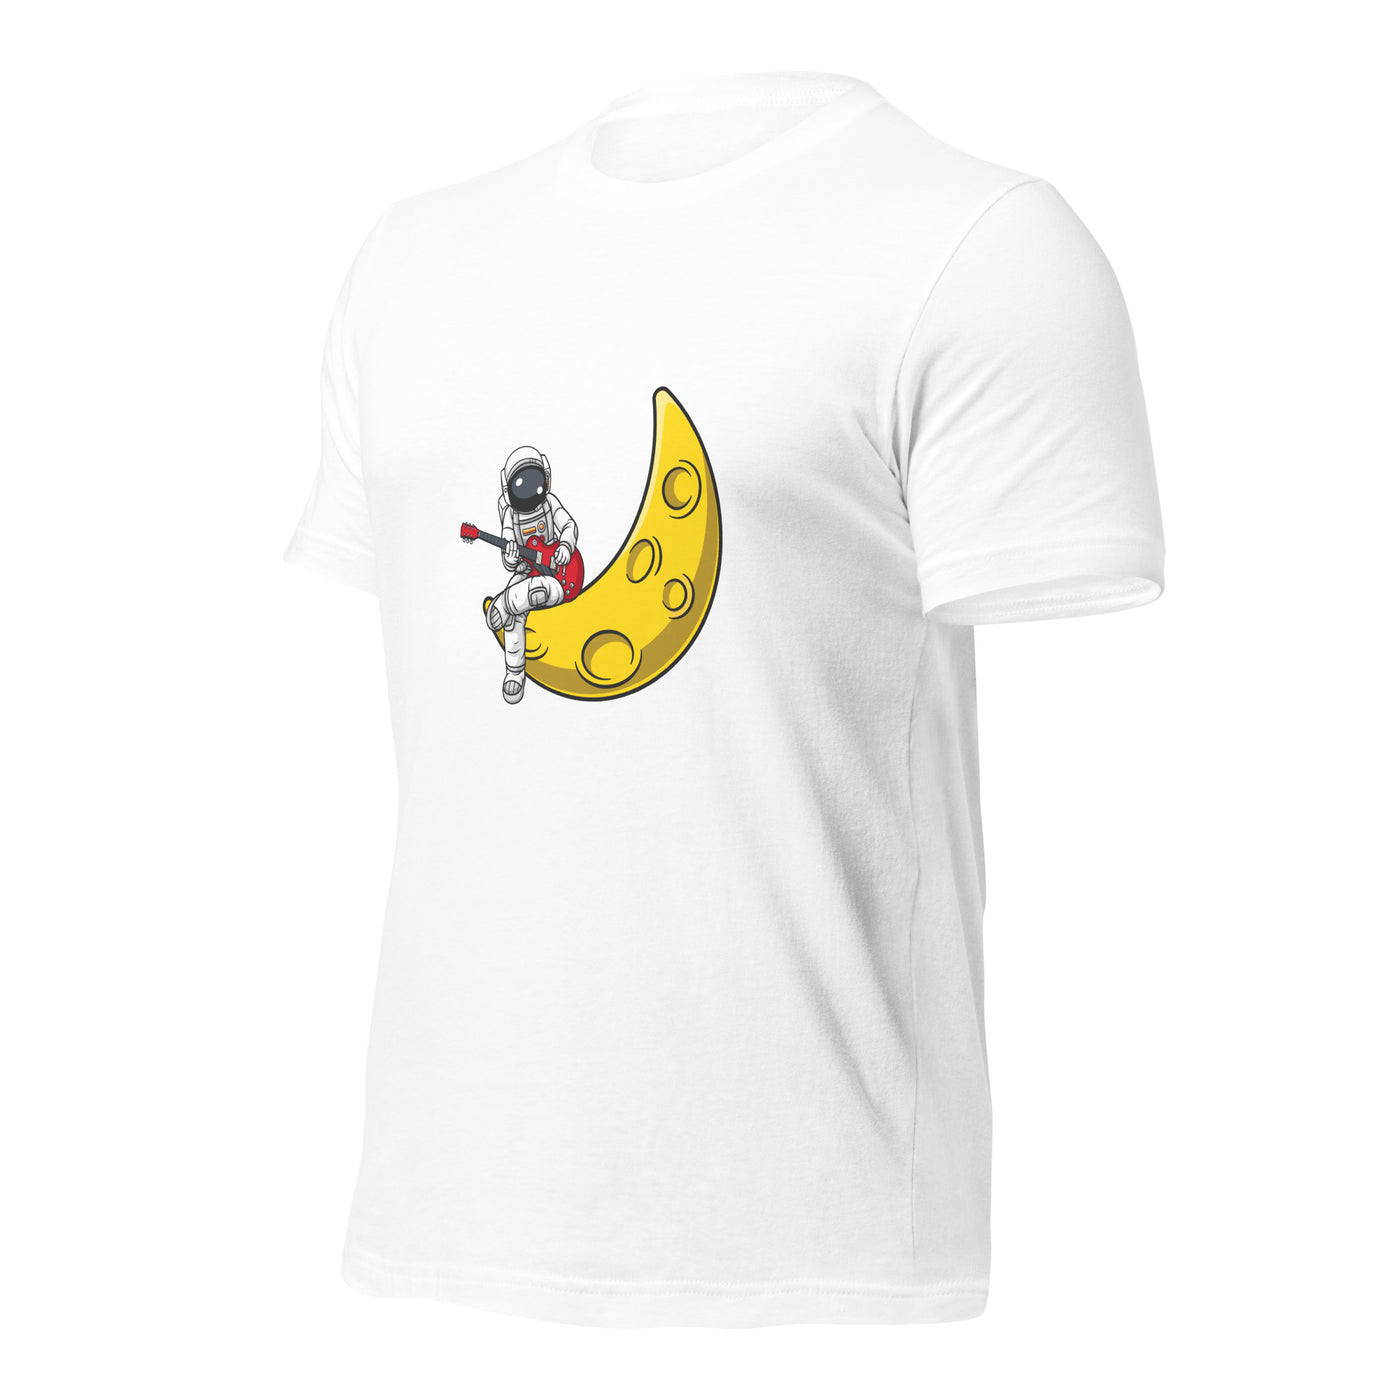 Astronaut Playing - Unisex t-shirt